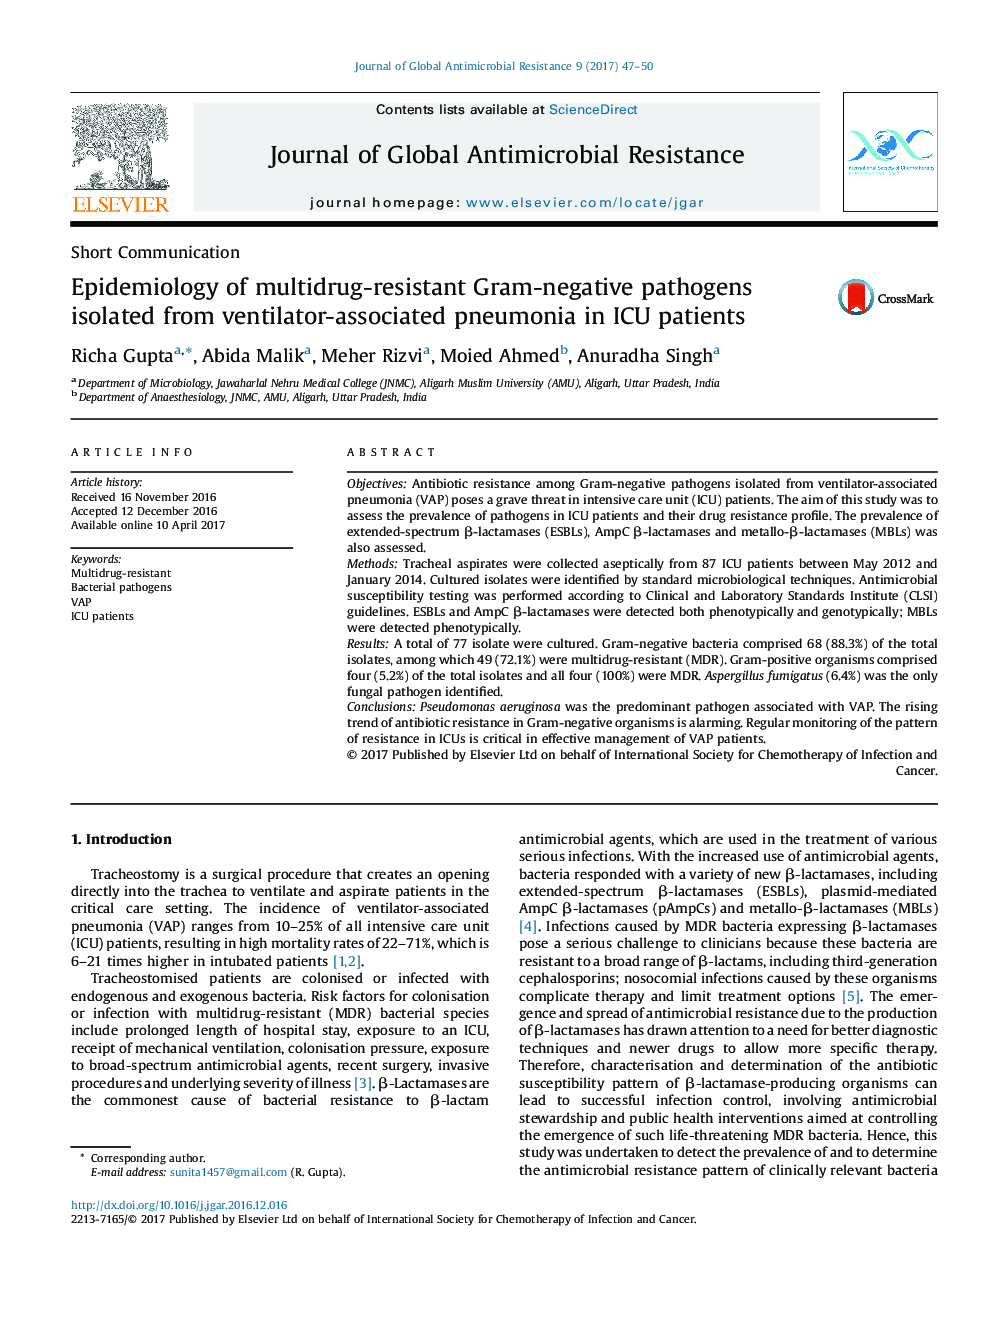 Epidemiology of multidrug-resistant Gram-negative pathogens isolated from ventilator-associated pneumonia in ICU patients